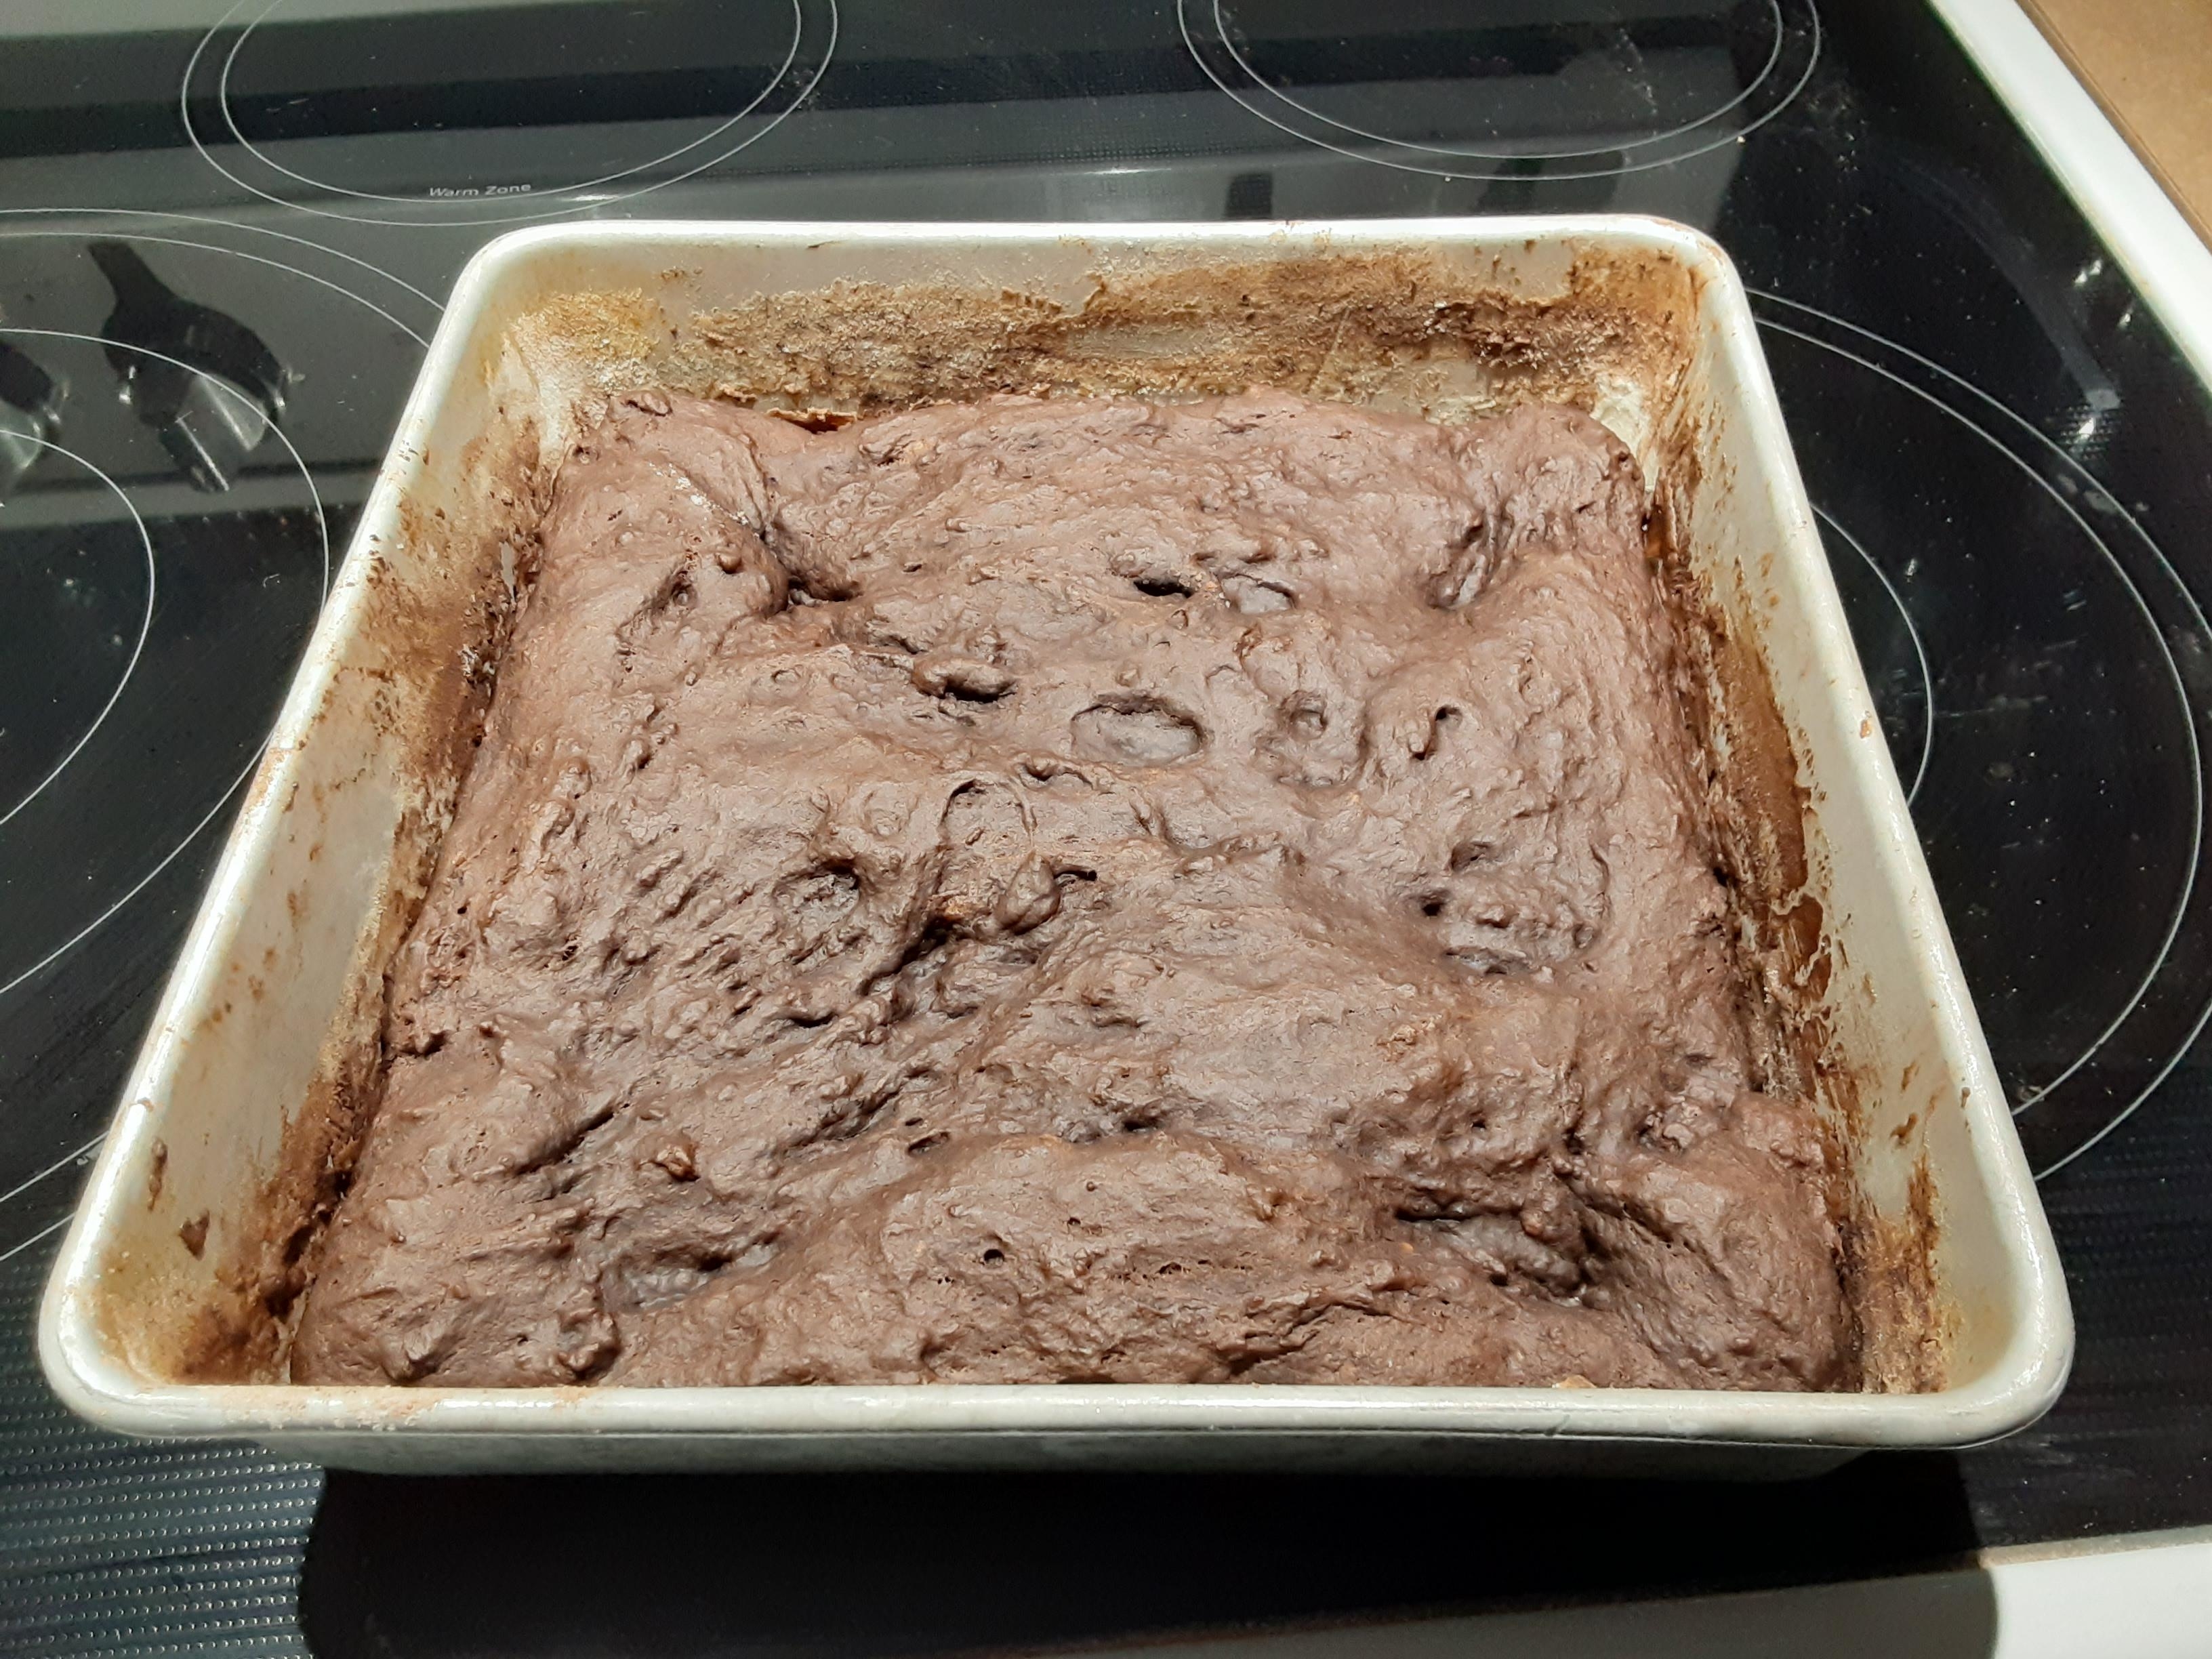 a lumpy, sugarless chocolate cake in a square pan